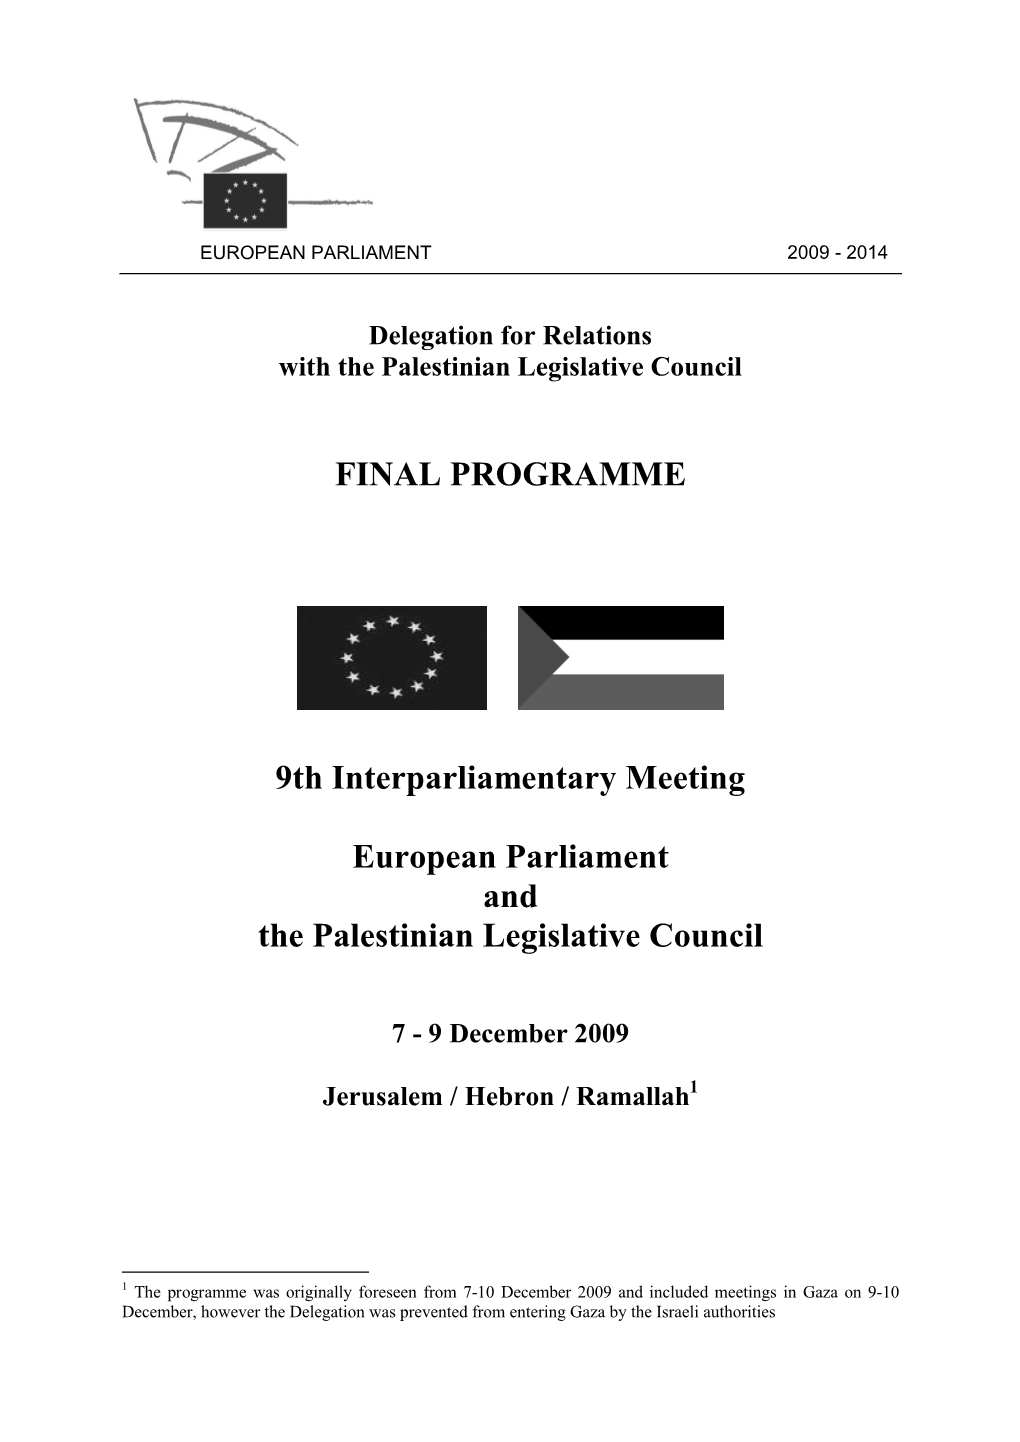 FINAL PROGRAMME 9Th Interparliamentary Meeting